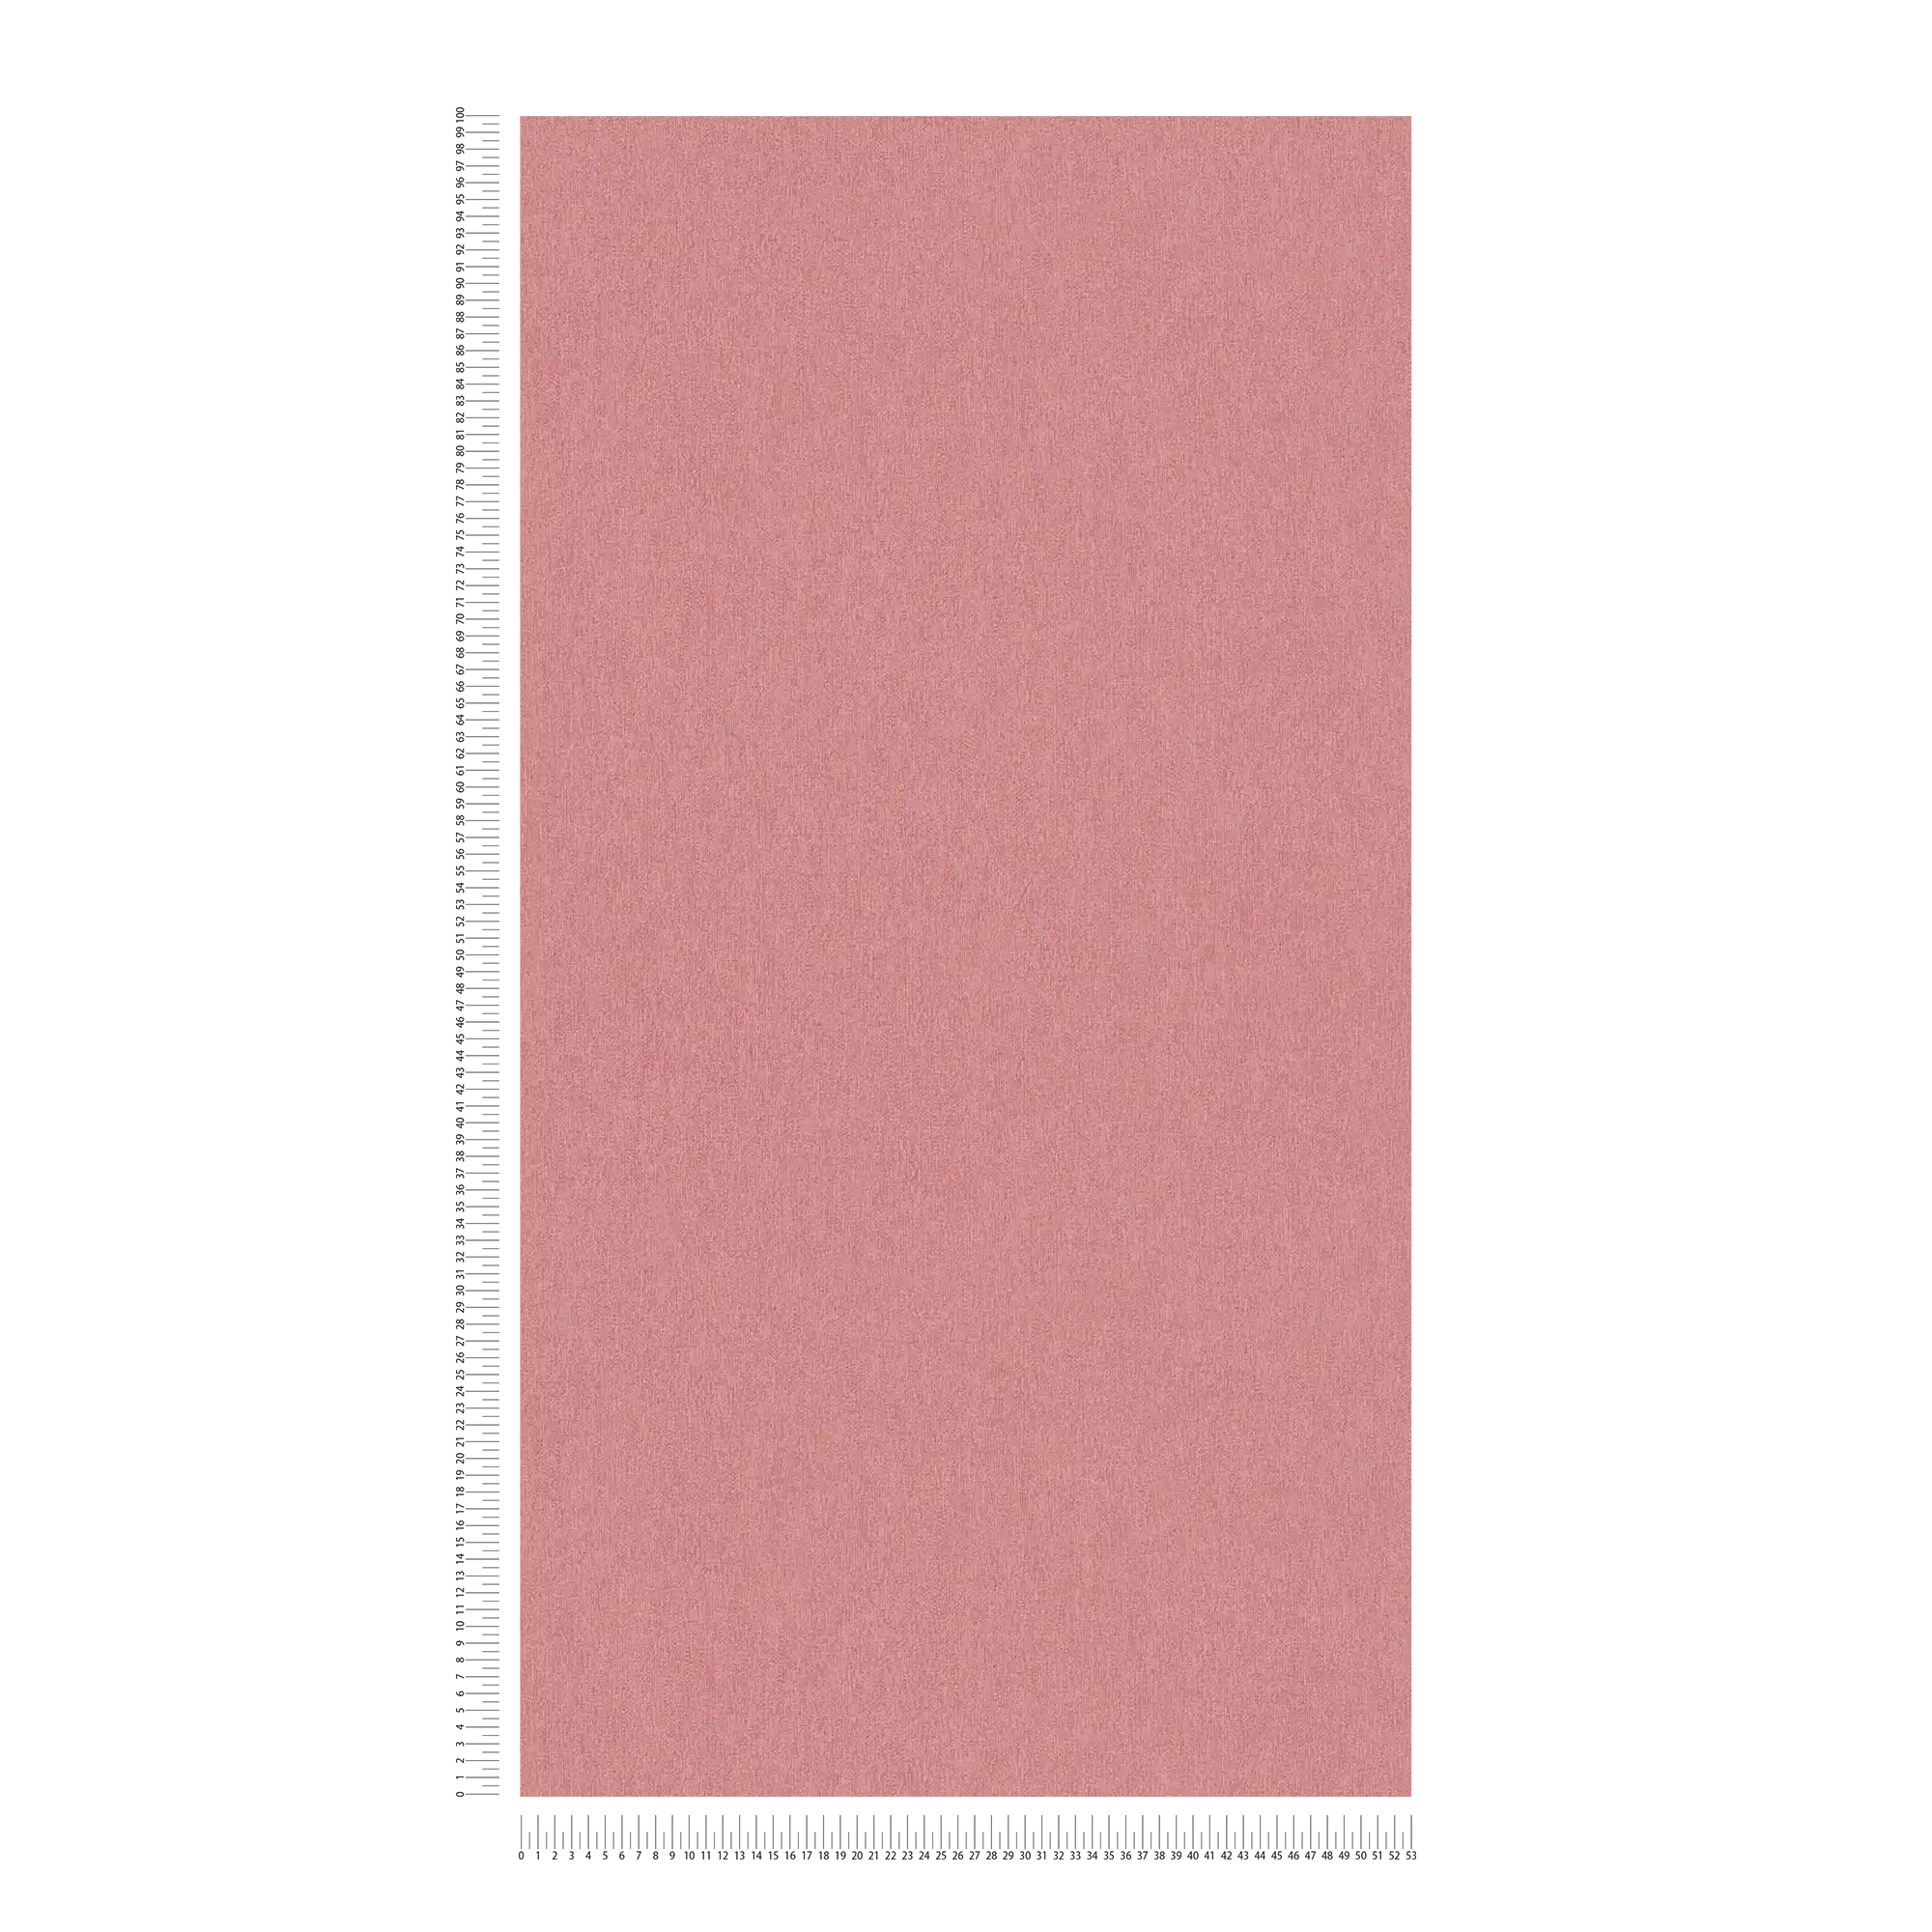             Carta da parati in tessuto non tessuto liscia e opaca con motivo a struttura - rosa
        